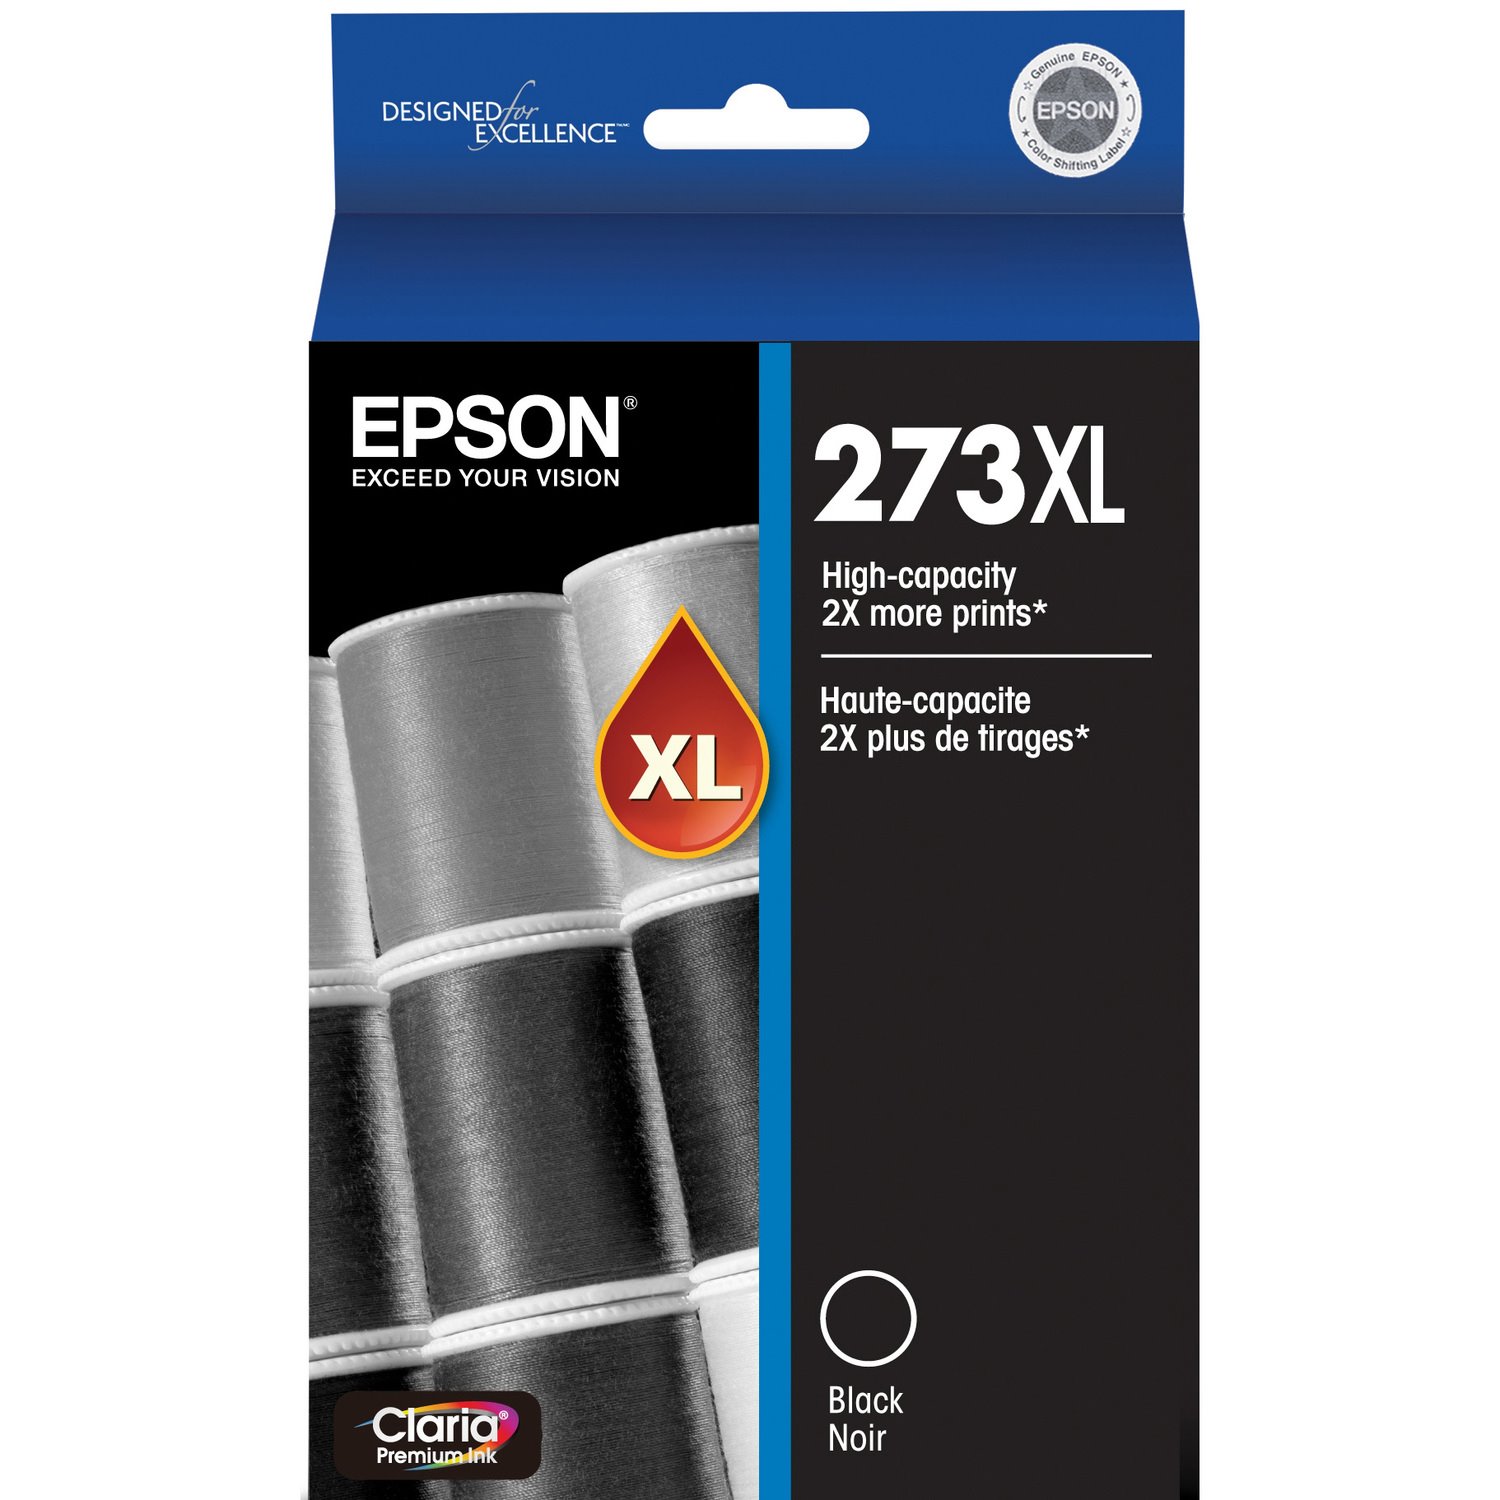 Epson Claria 273XL Original High Yield Inkjet Ink Cartridge - Black - 1 Pack